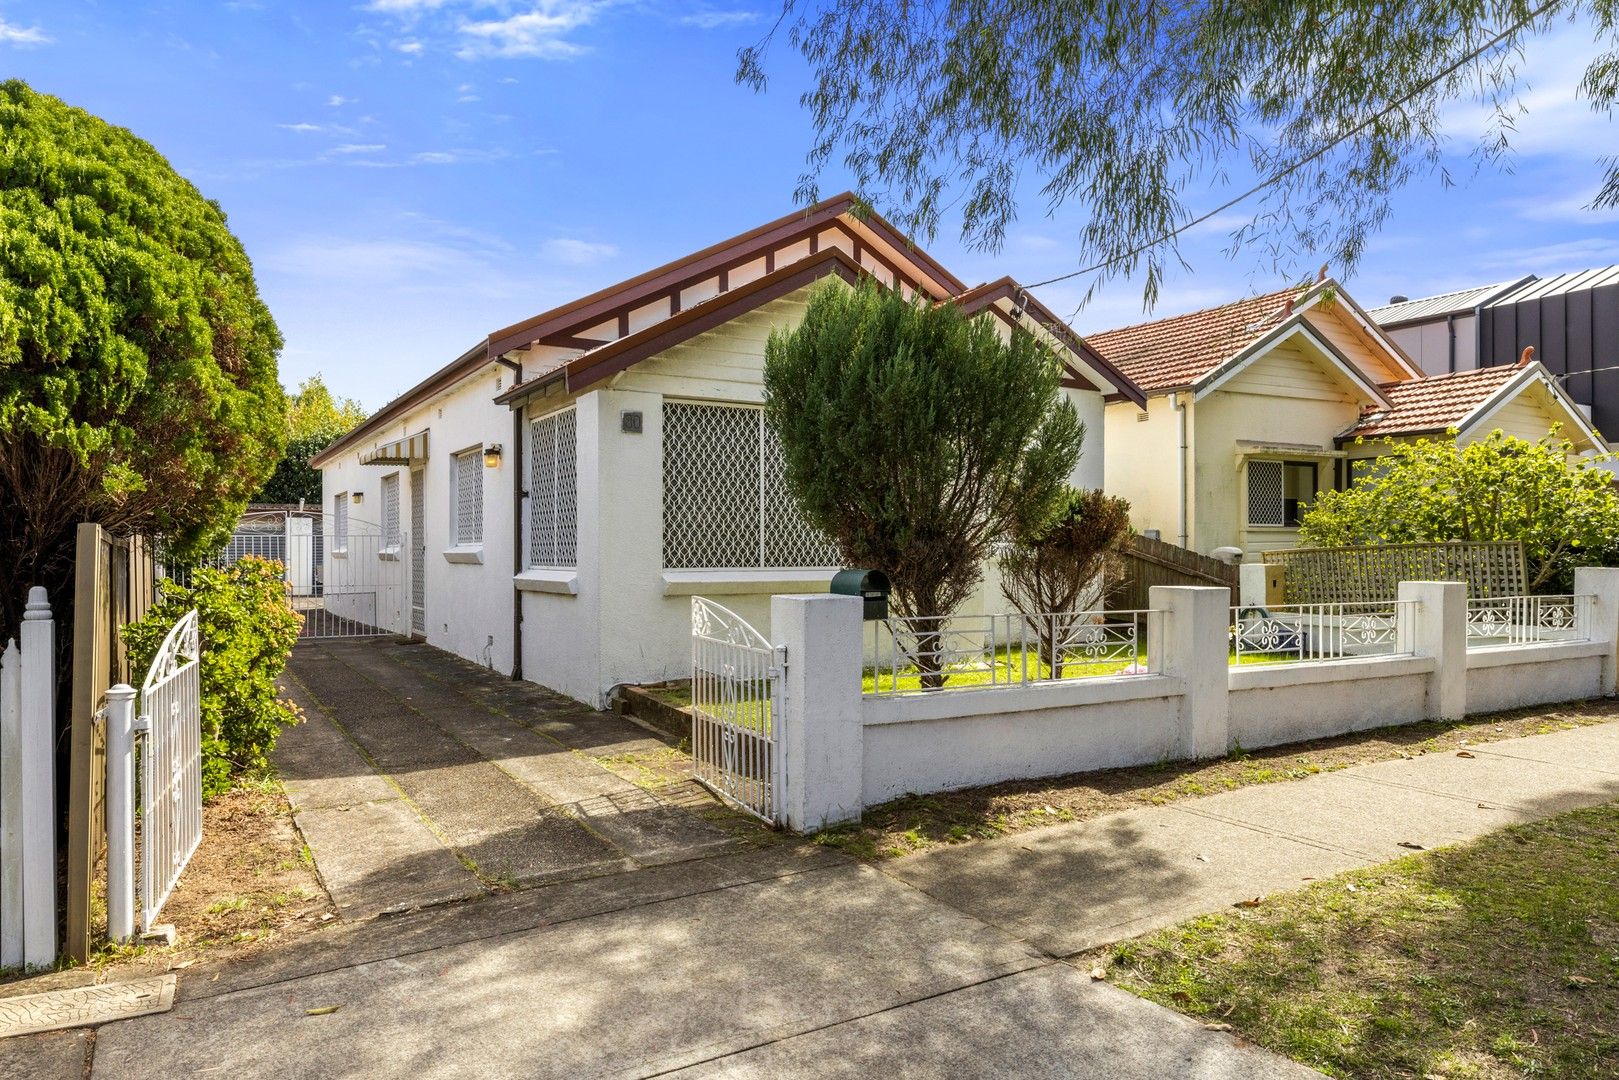 3 bedrooms House in 80 Loch Maree Street MAROUBRA NSW, 2035